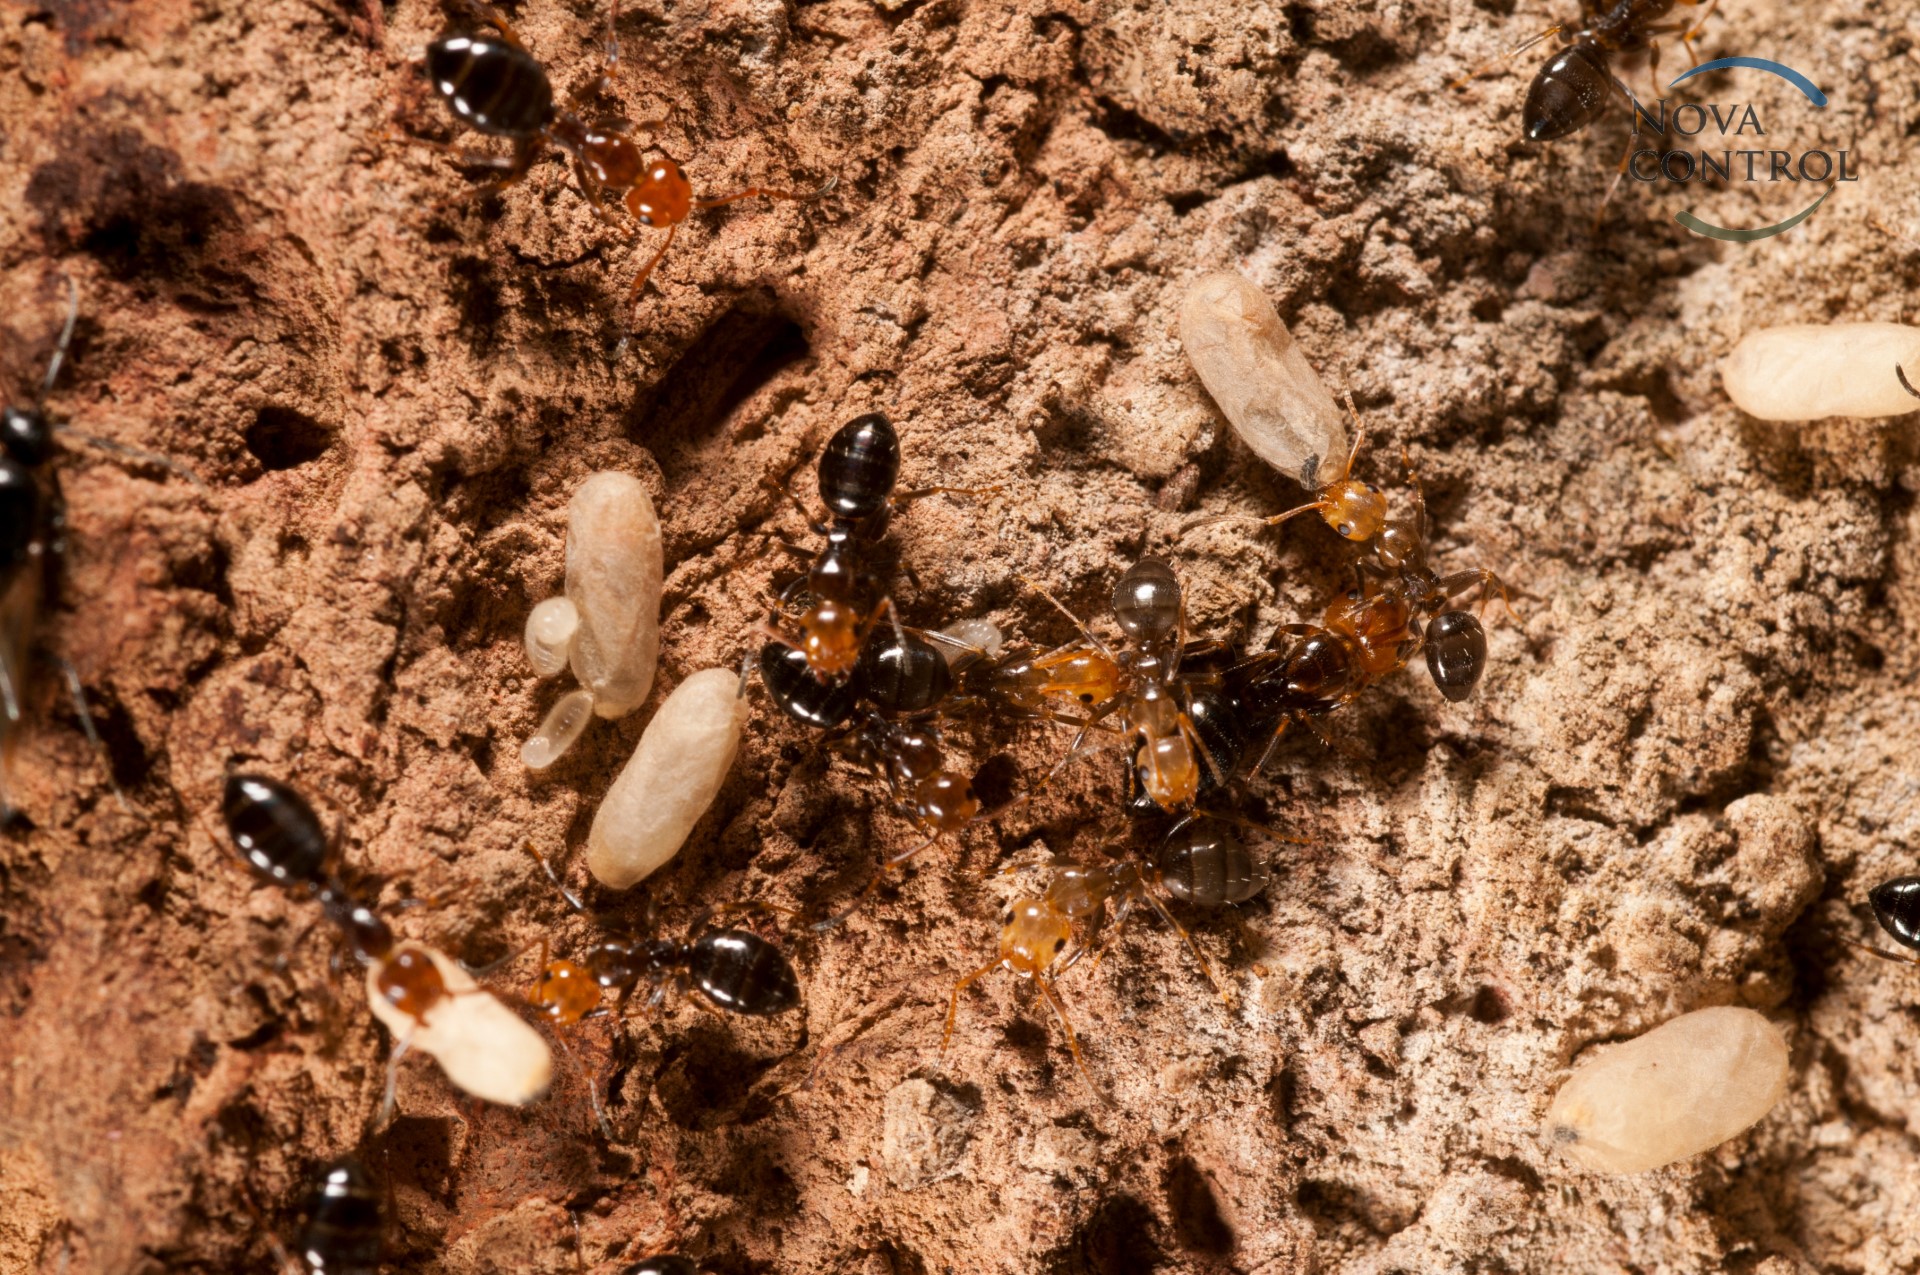 Camponotus lateralis, arboreal species of ant